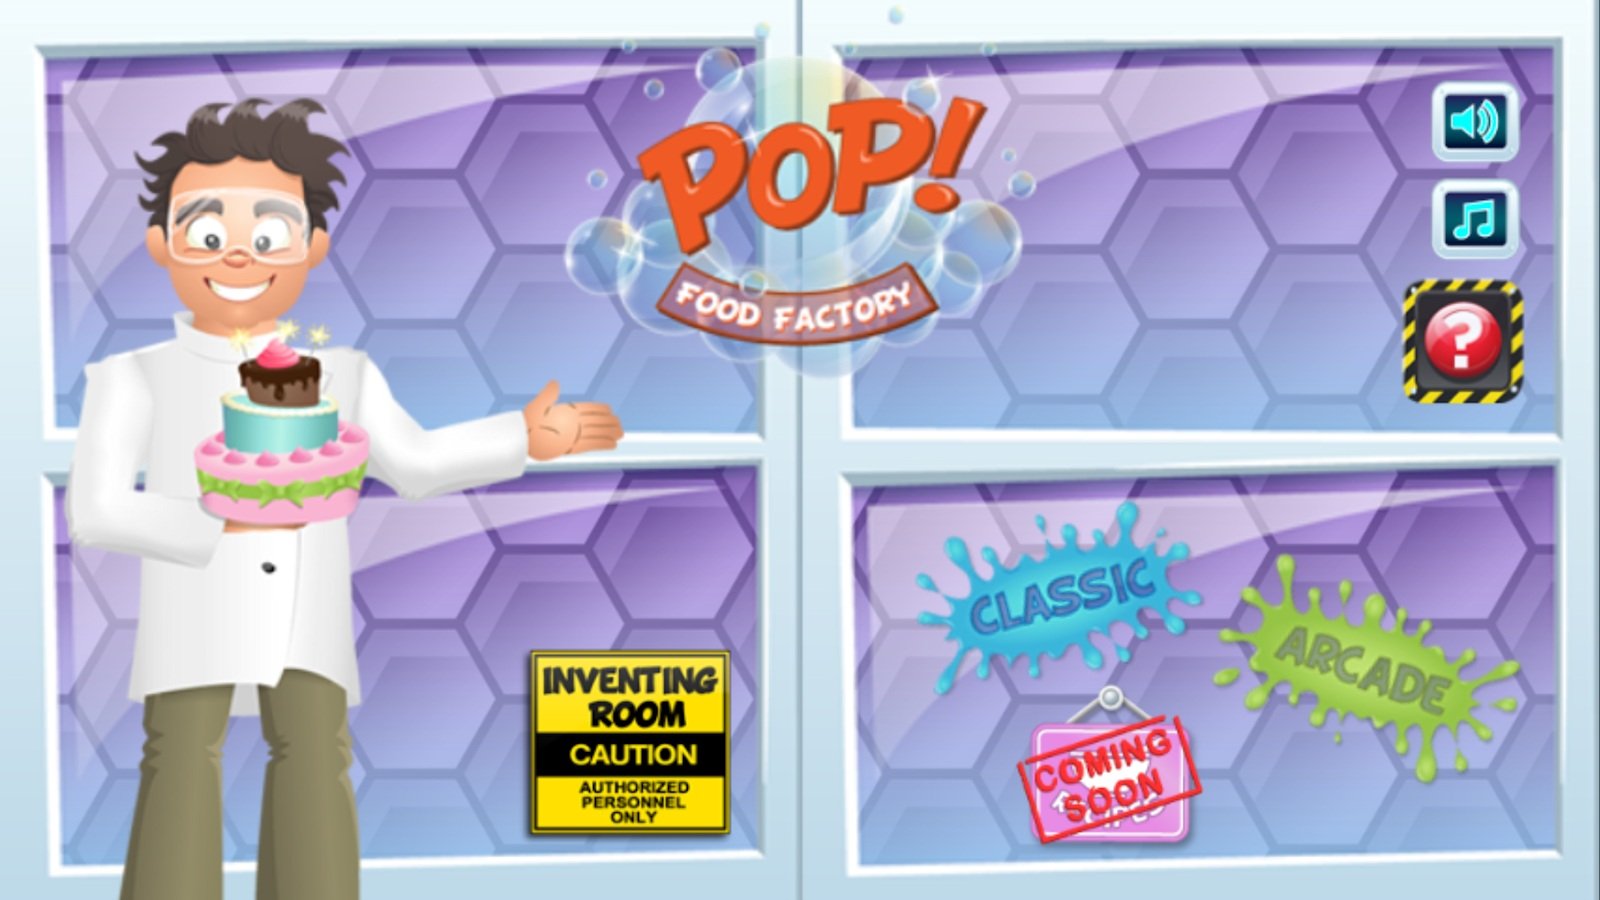 Pop! Food Factory